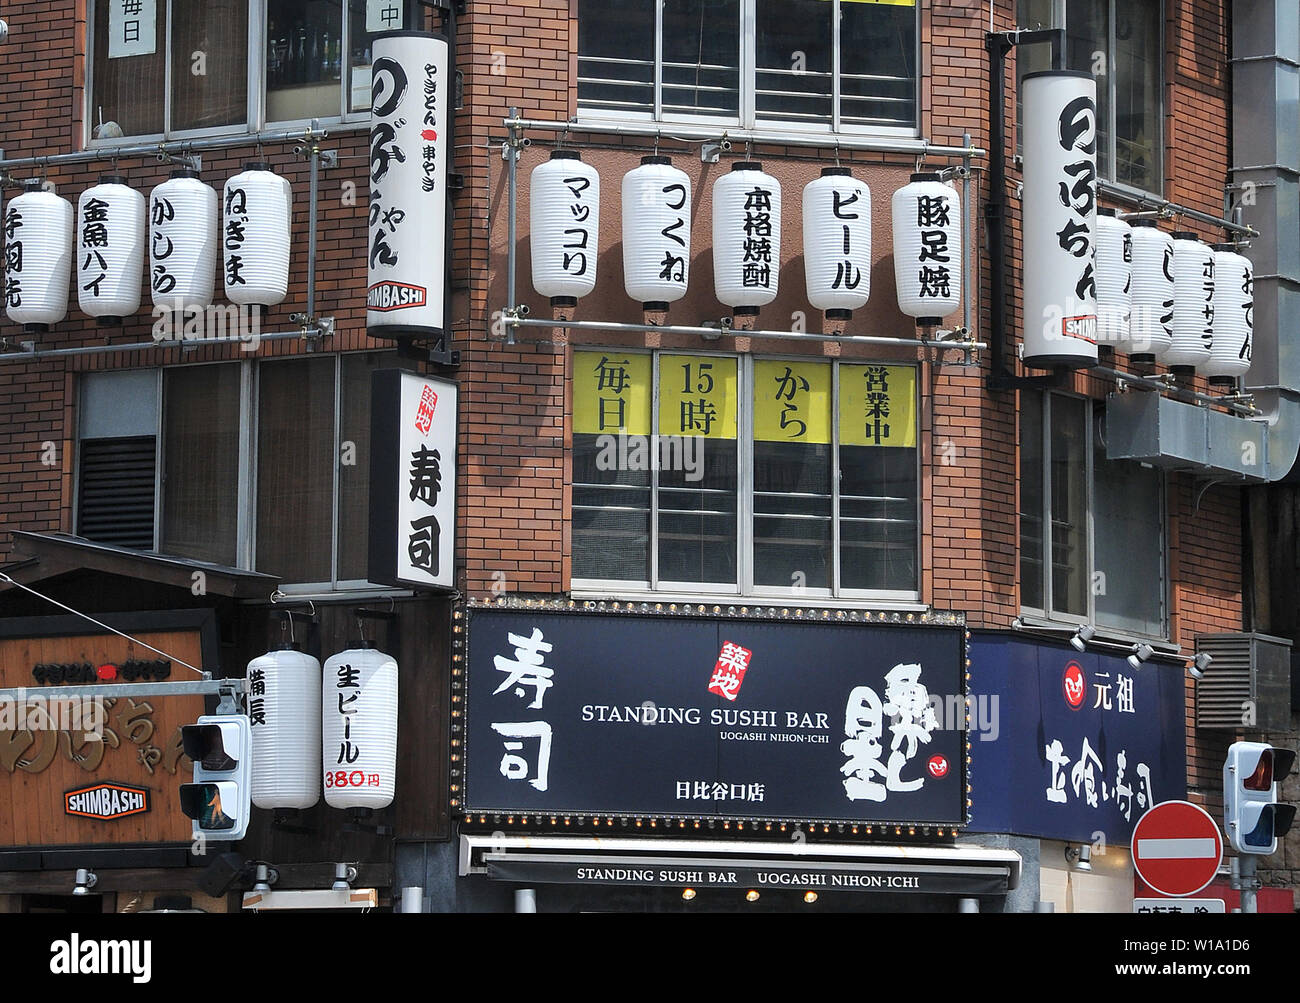 Standing Sushi Bar, Uogashi Nihon-Ichi, Ginza, Tokyo, Japan Stock Photo